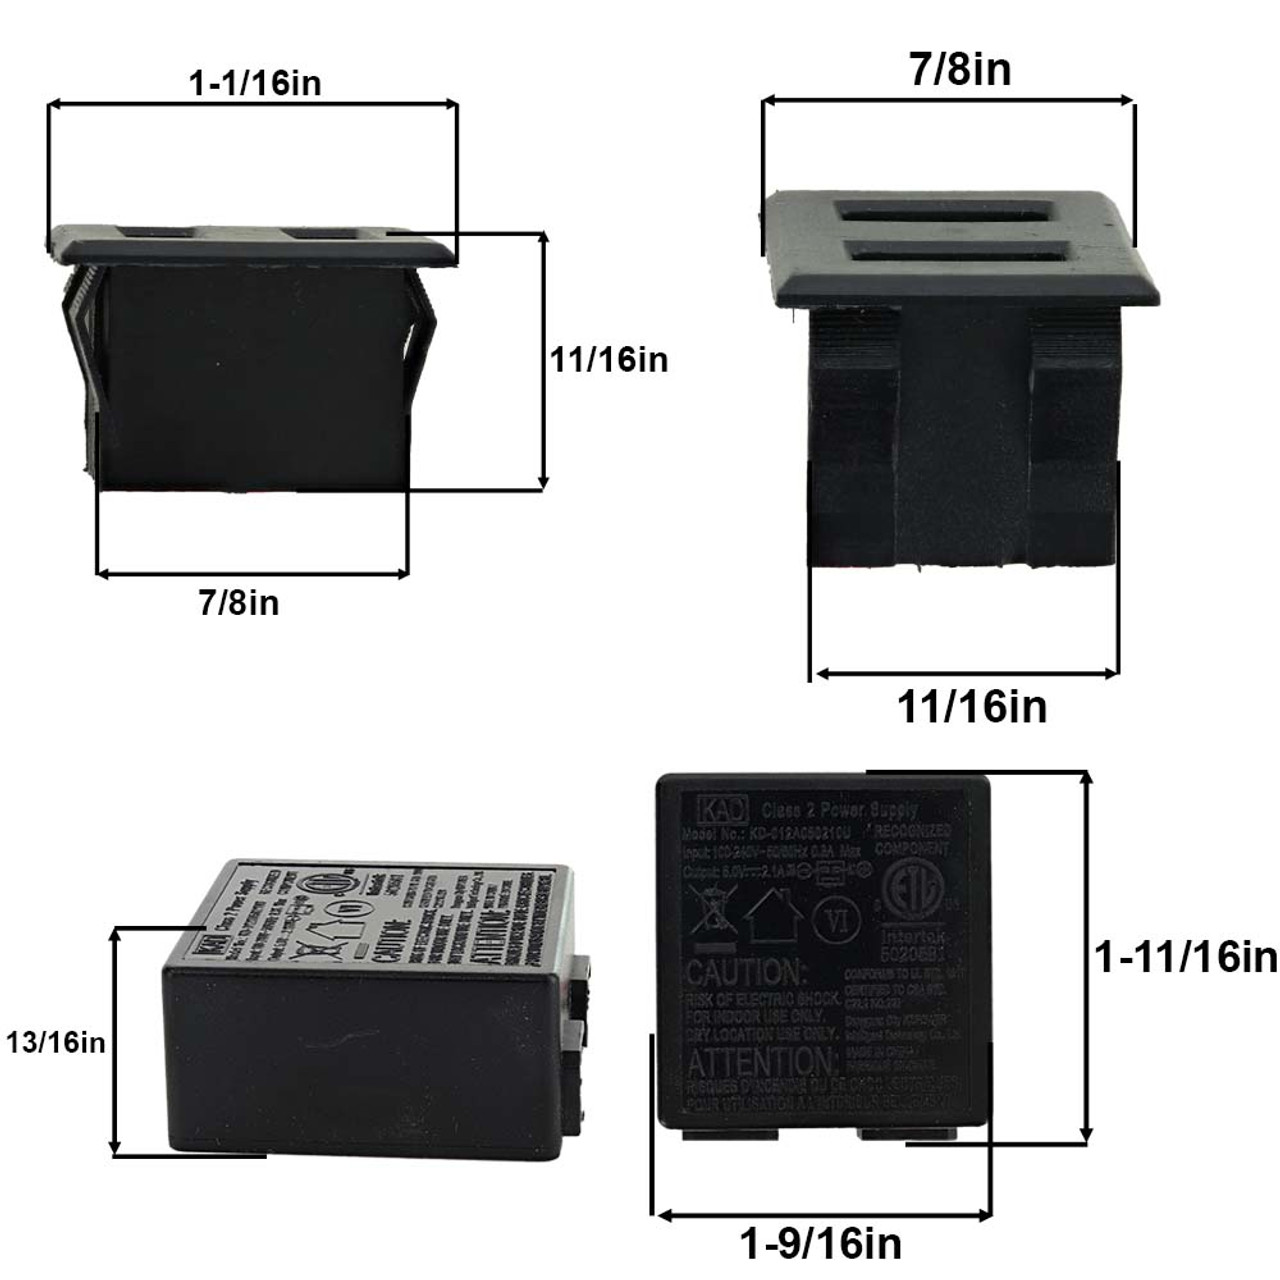 USB-A inline lamp outlet; Input: 100-240Vac 50/60Hz 0.32A; Output 5Vdc 2.1a  Max; CRUS E505525